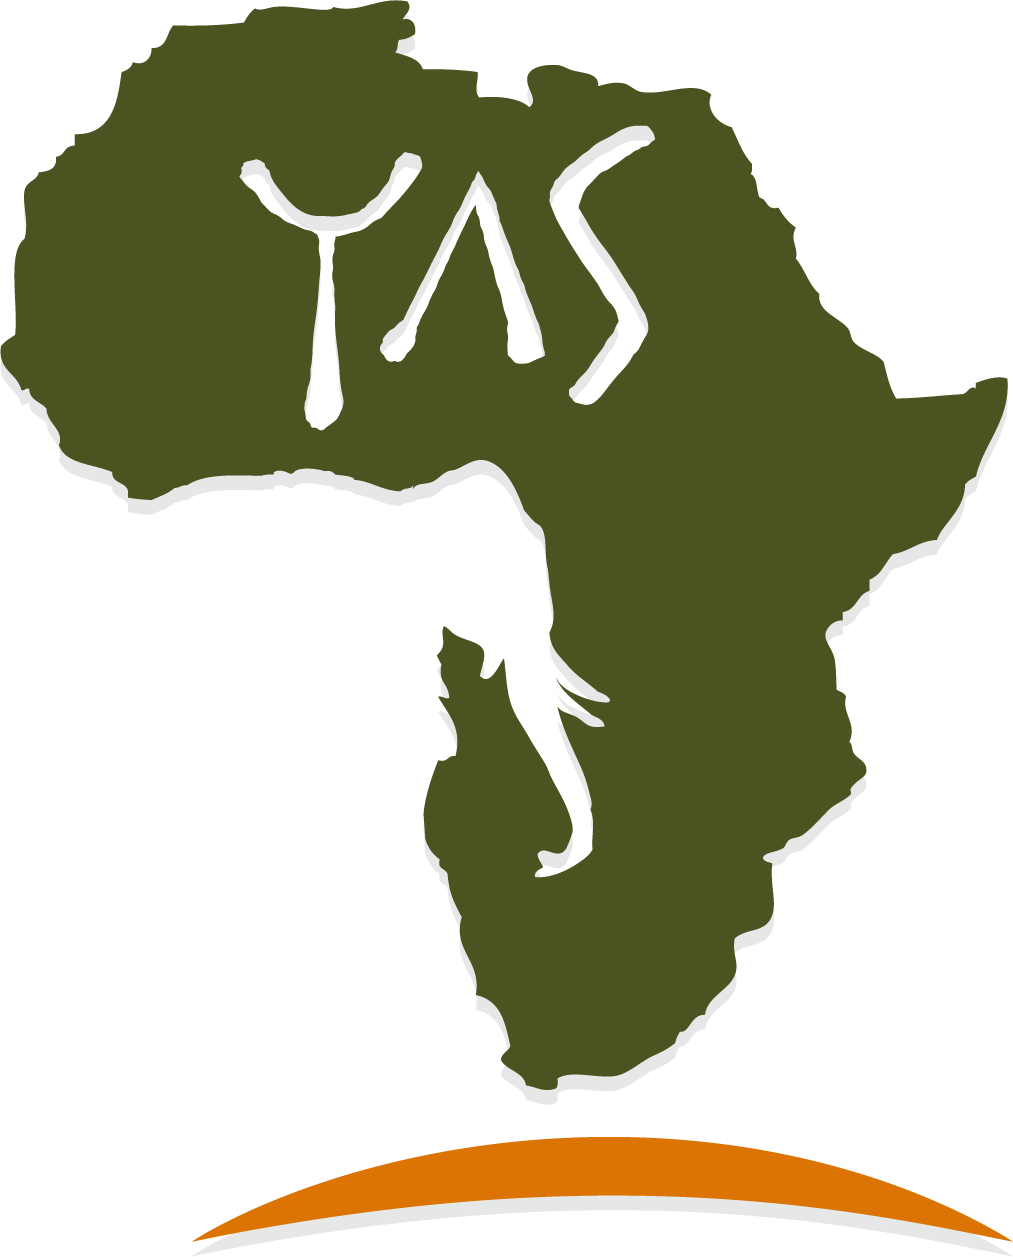 Your African Safari logo